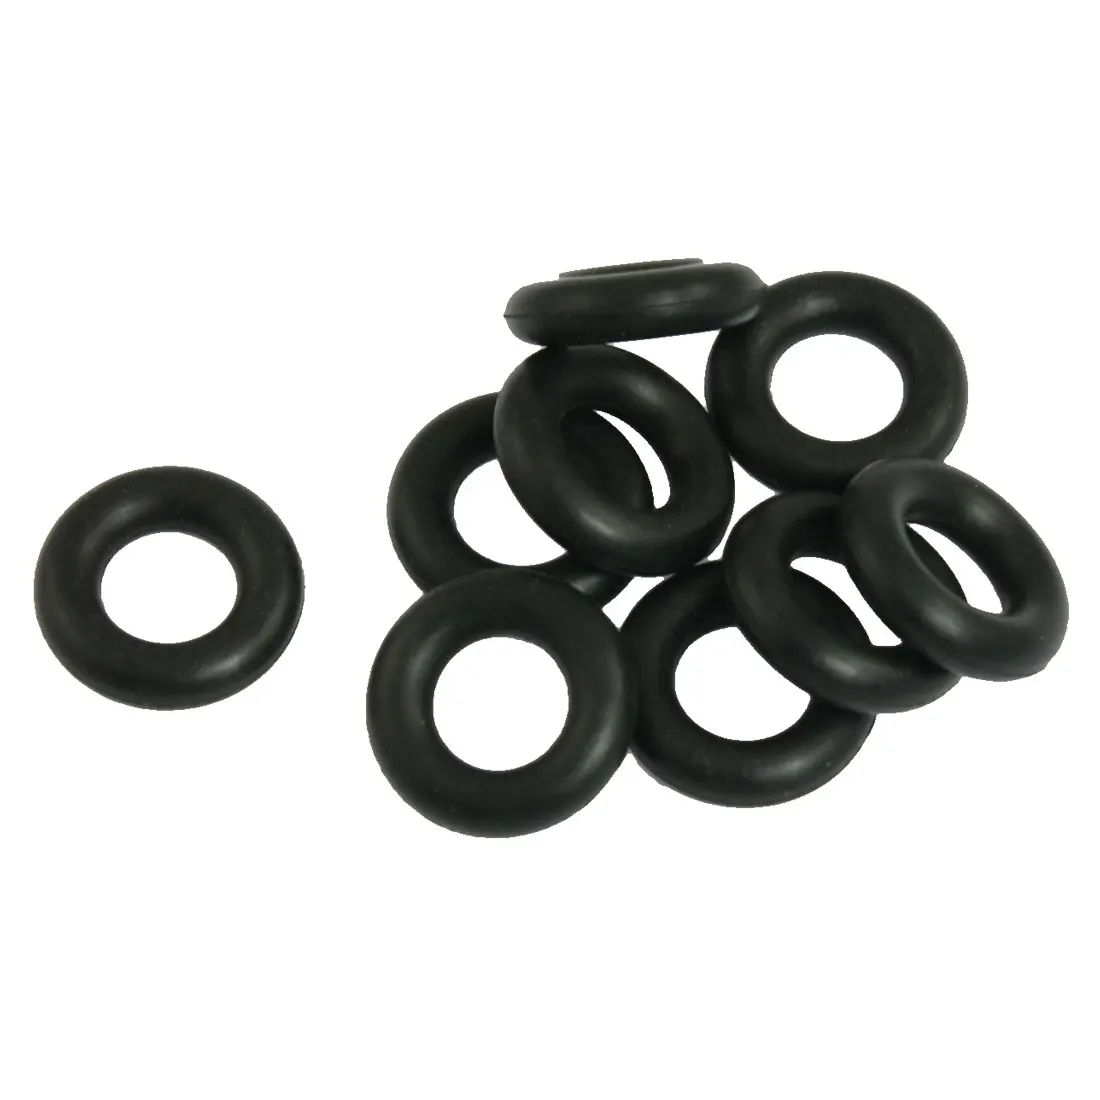 

Uxcell 10 Pcs/lot 5mm Mechanical Black Nbr O Rings Oil Seal Washers Id 10mm 15mm 16mm 18mm 20mm 22mm 24mm 28mm